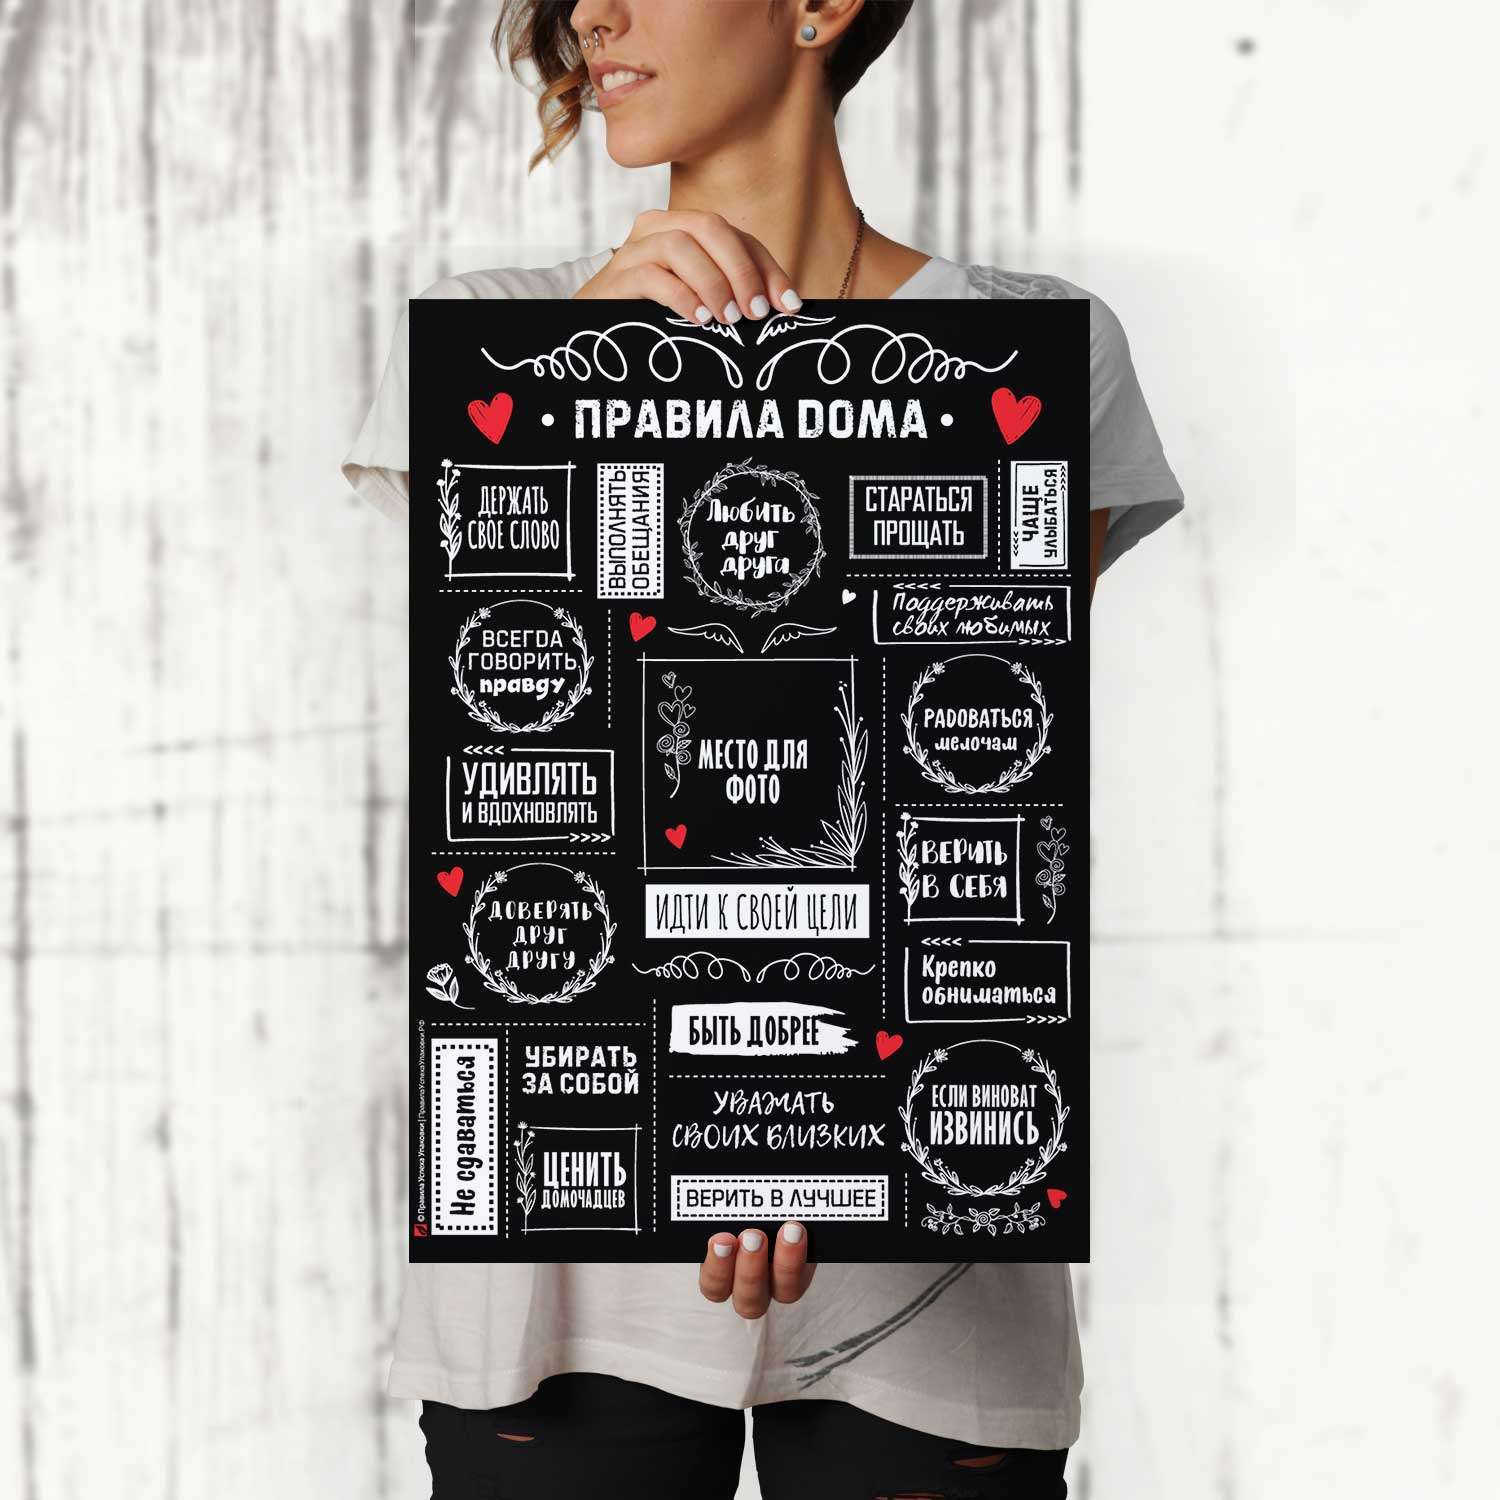 Постер Правила Успеха Правила дома со стикерами-наклейками в тубусе - фото 2